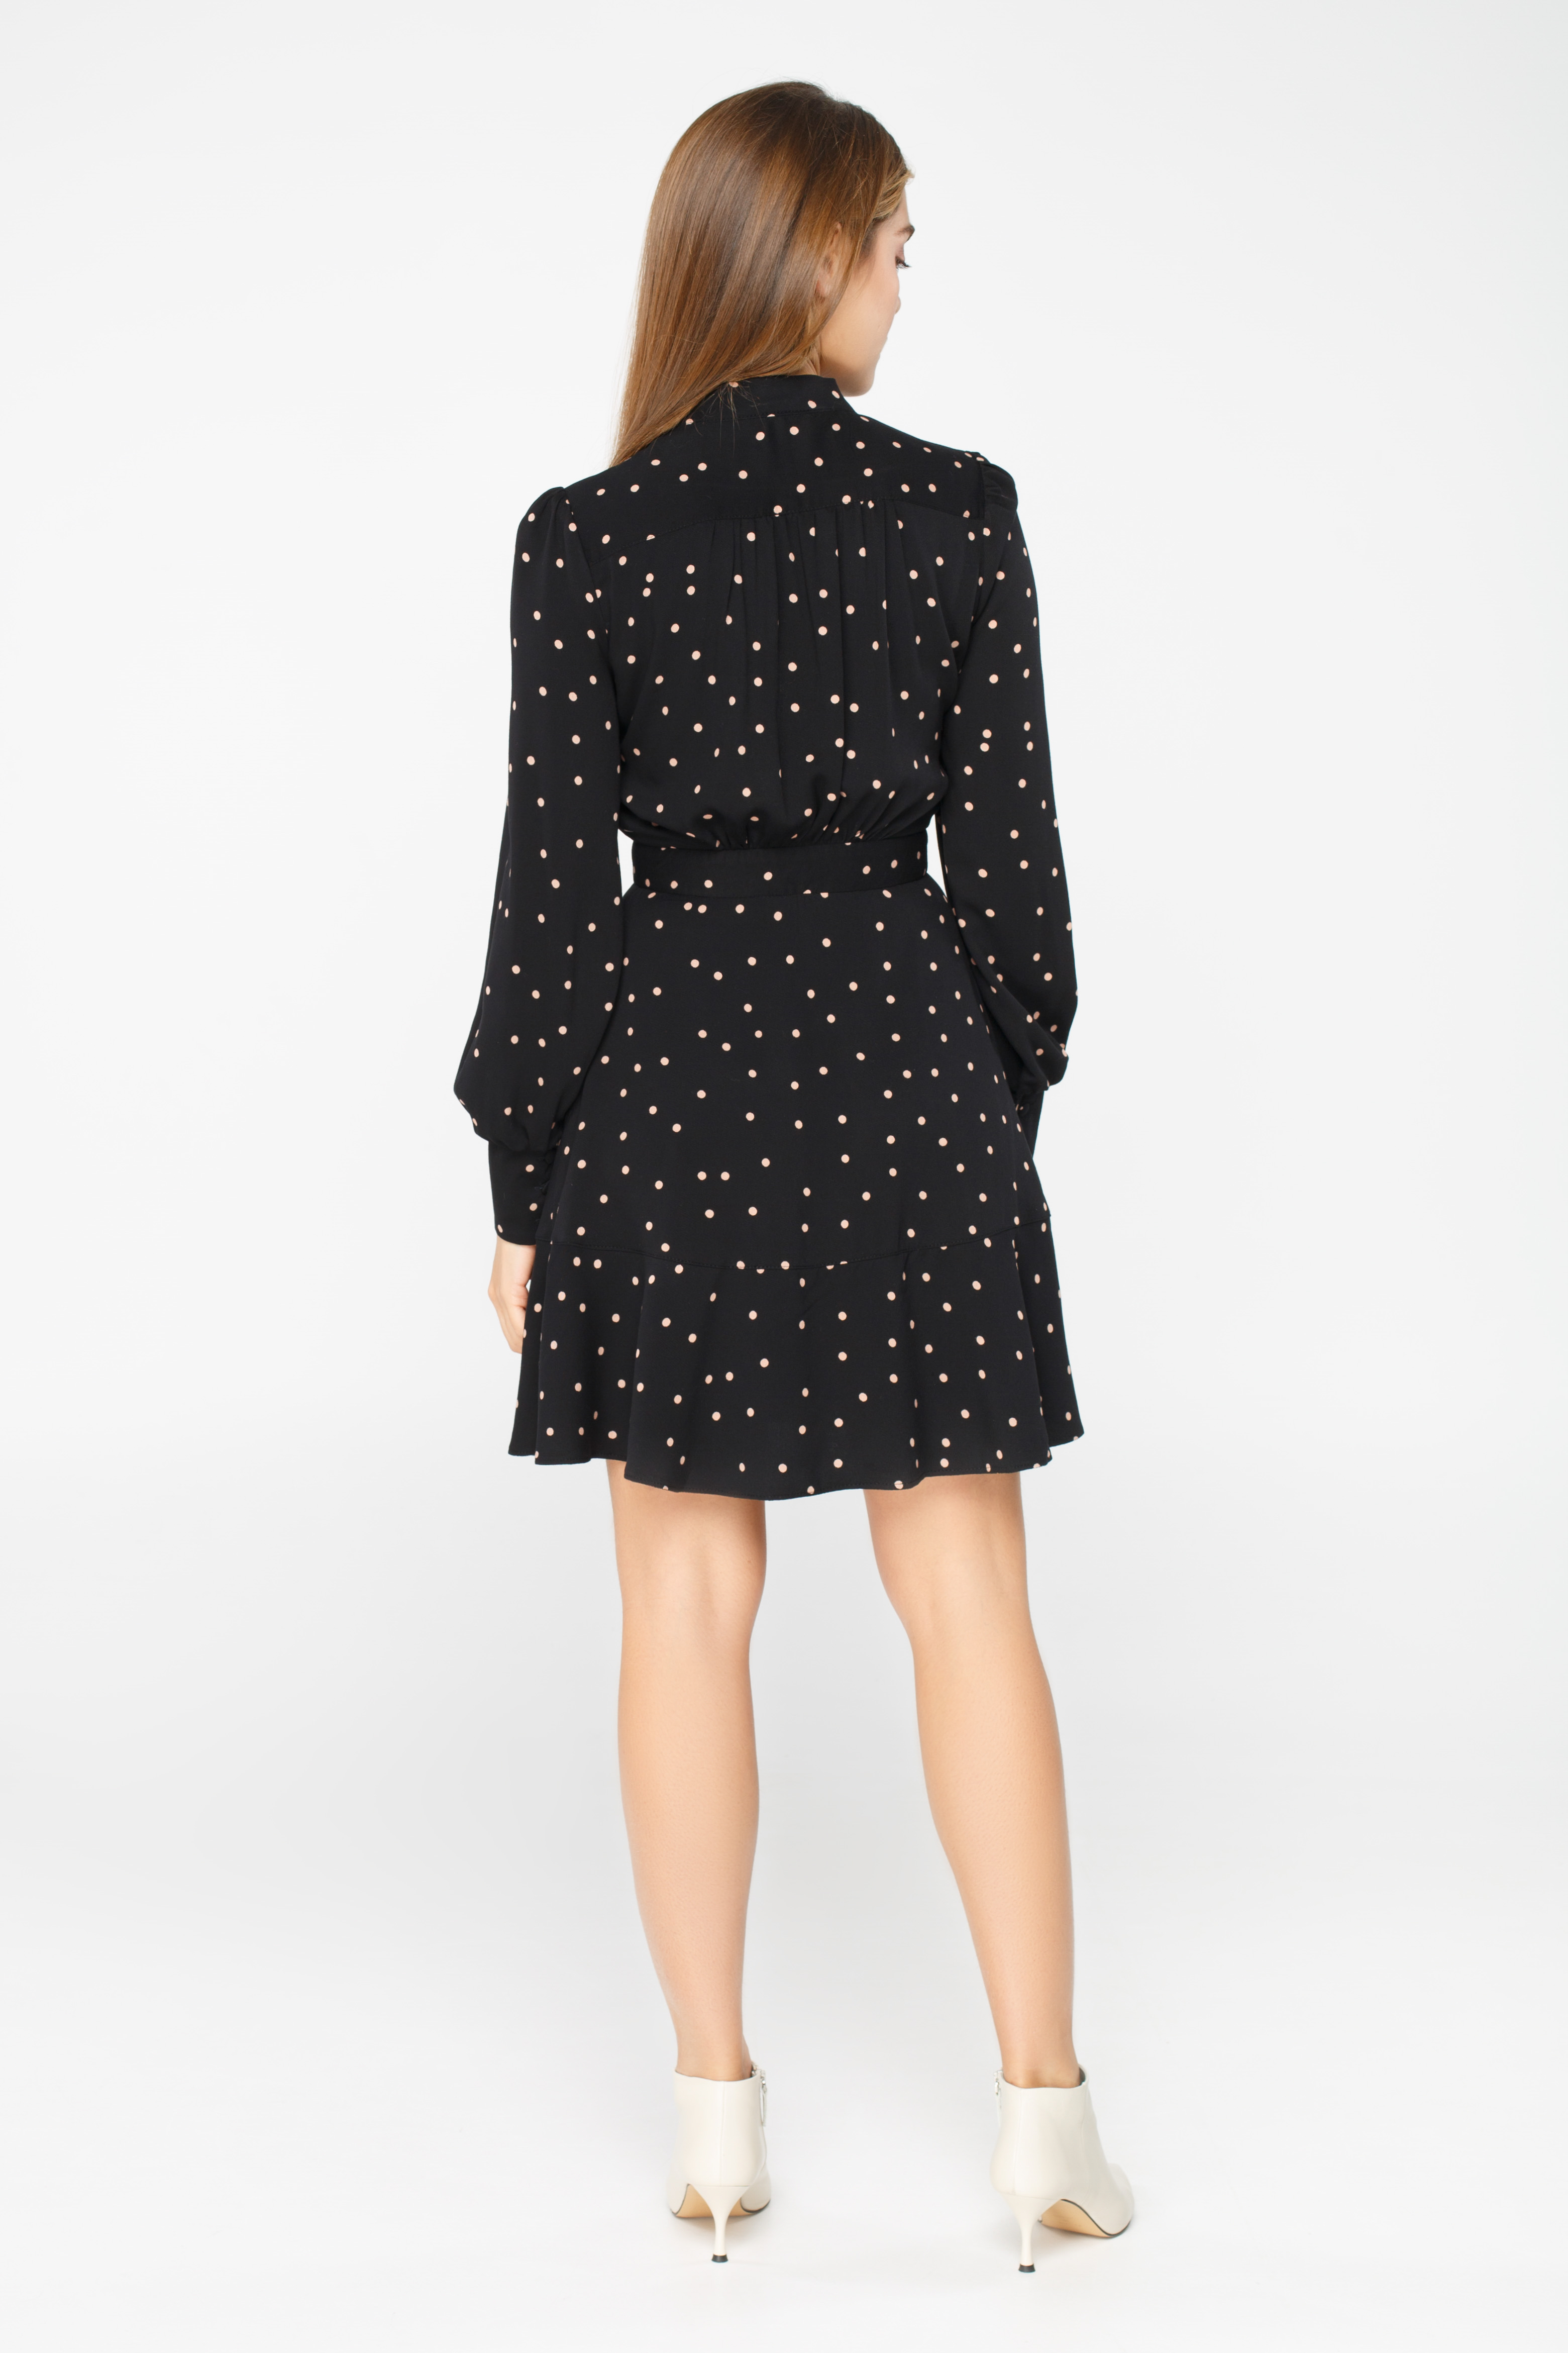 Black polka dot dress above the knee, photo 5